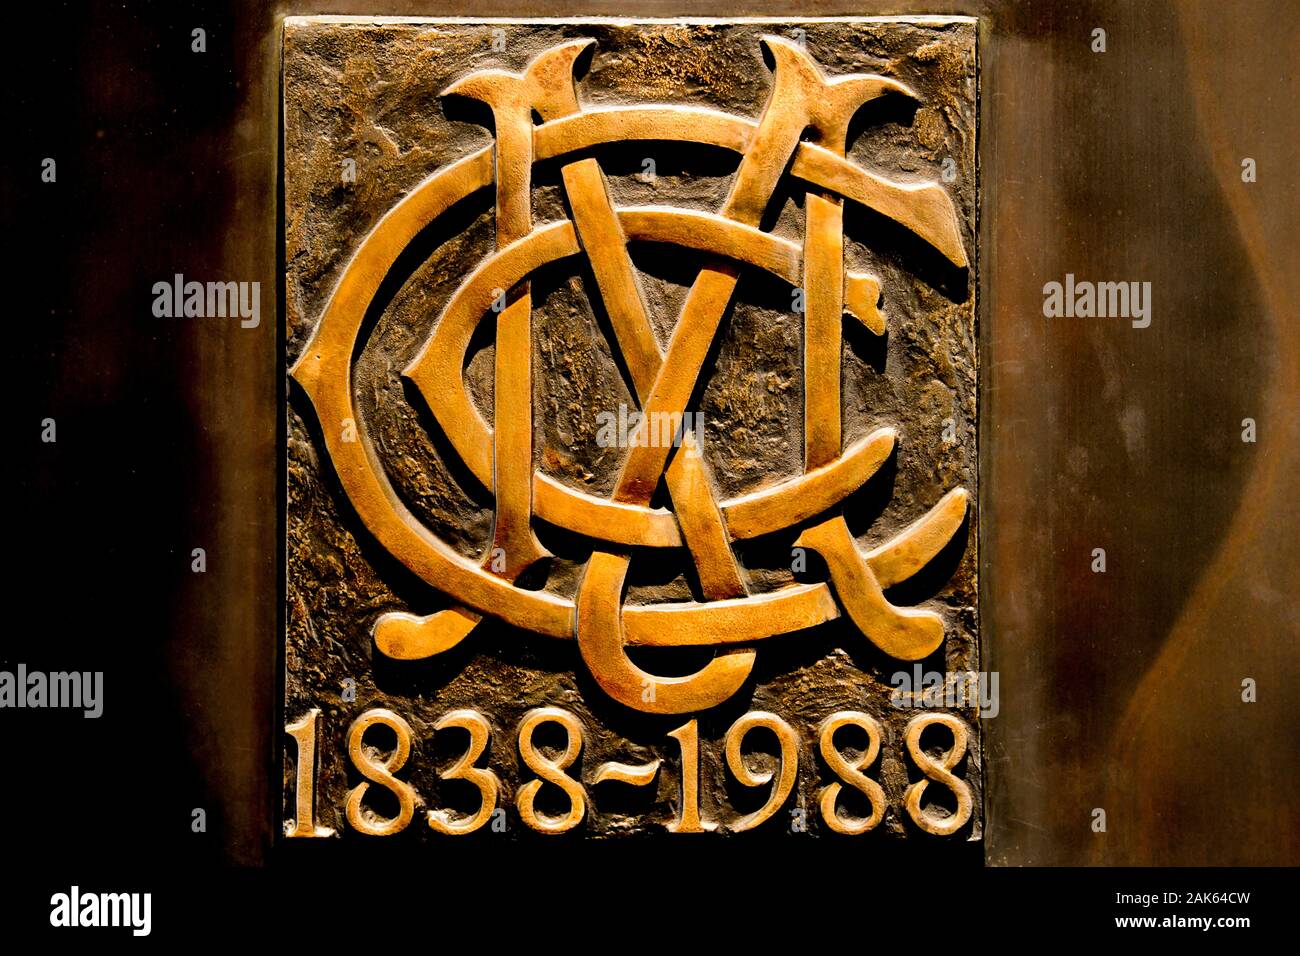 MCC Melbourne Cricket Club insignia on 150th 1838-1988 commemorative bronze doors at MCG - Melbourne Cricket Ground Stock Photo